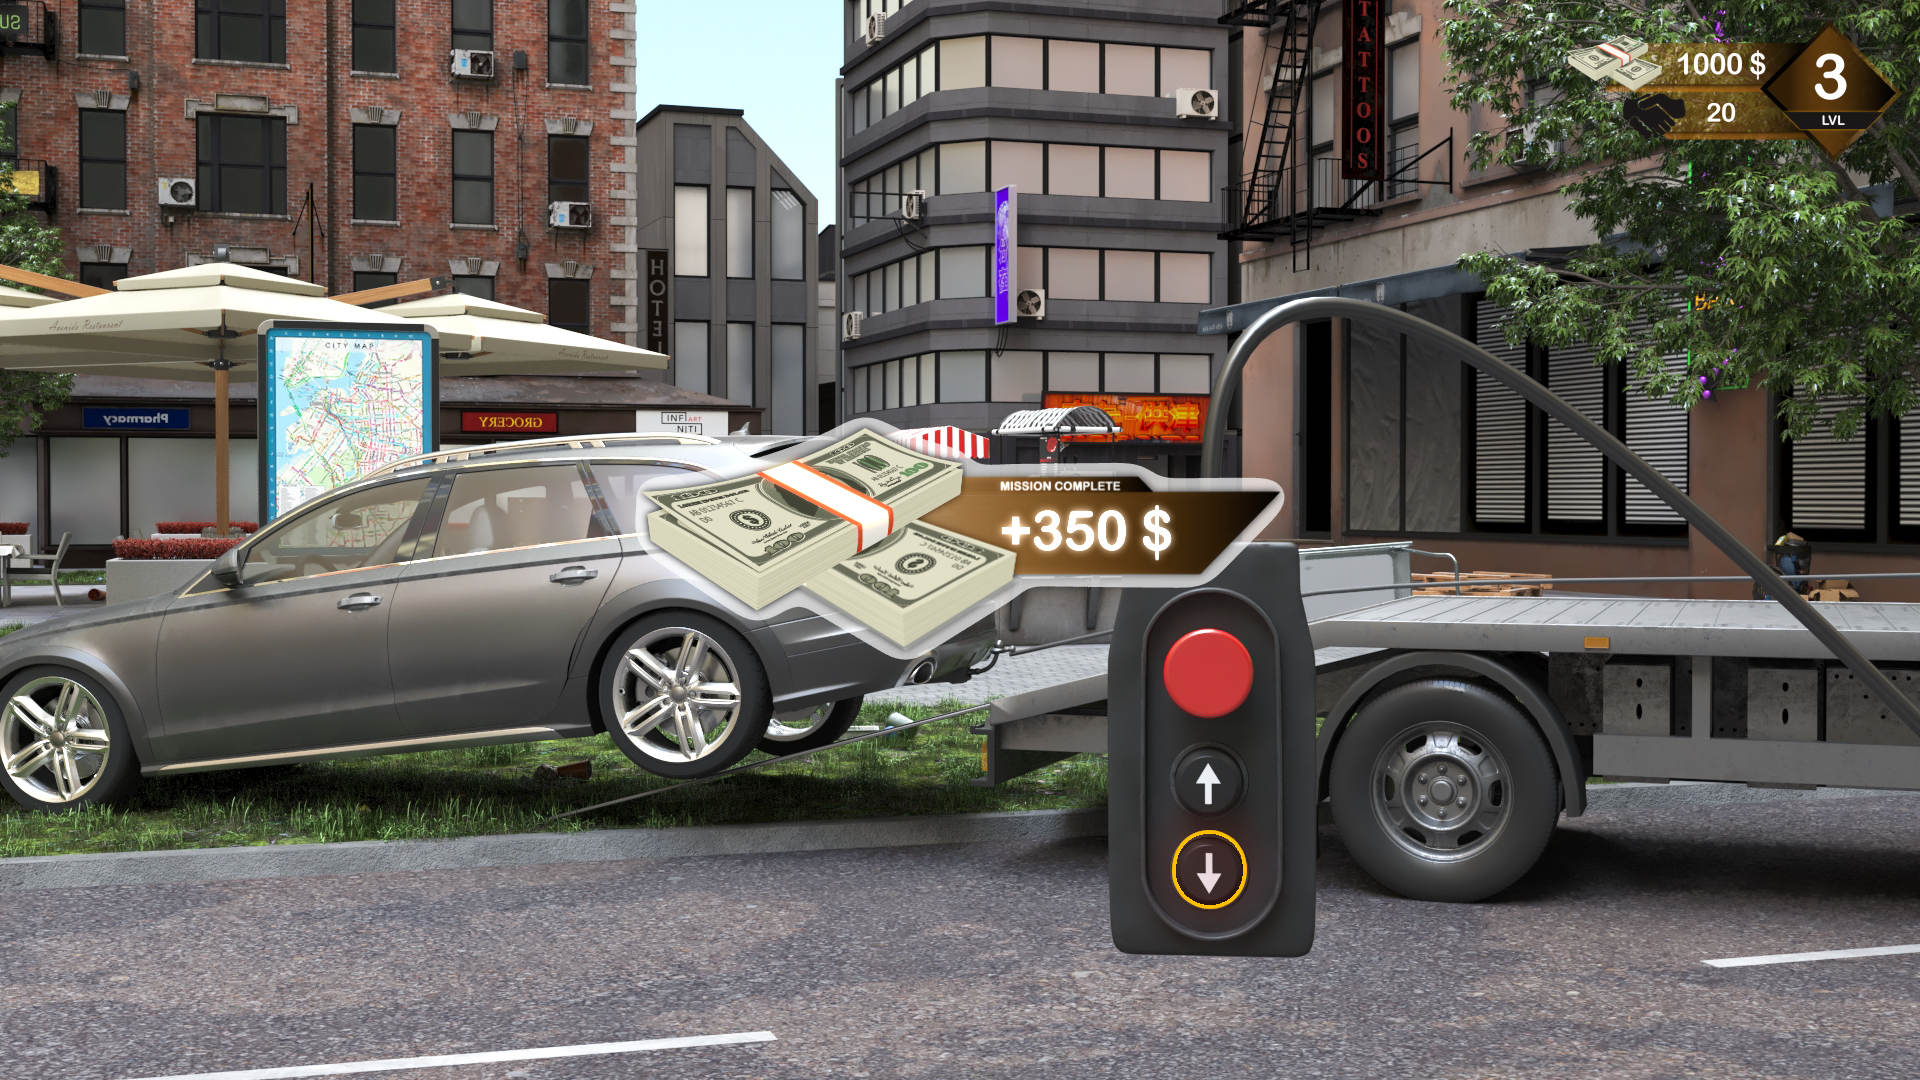 Roadside Assistance Simulator screenshot 33711